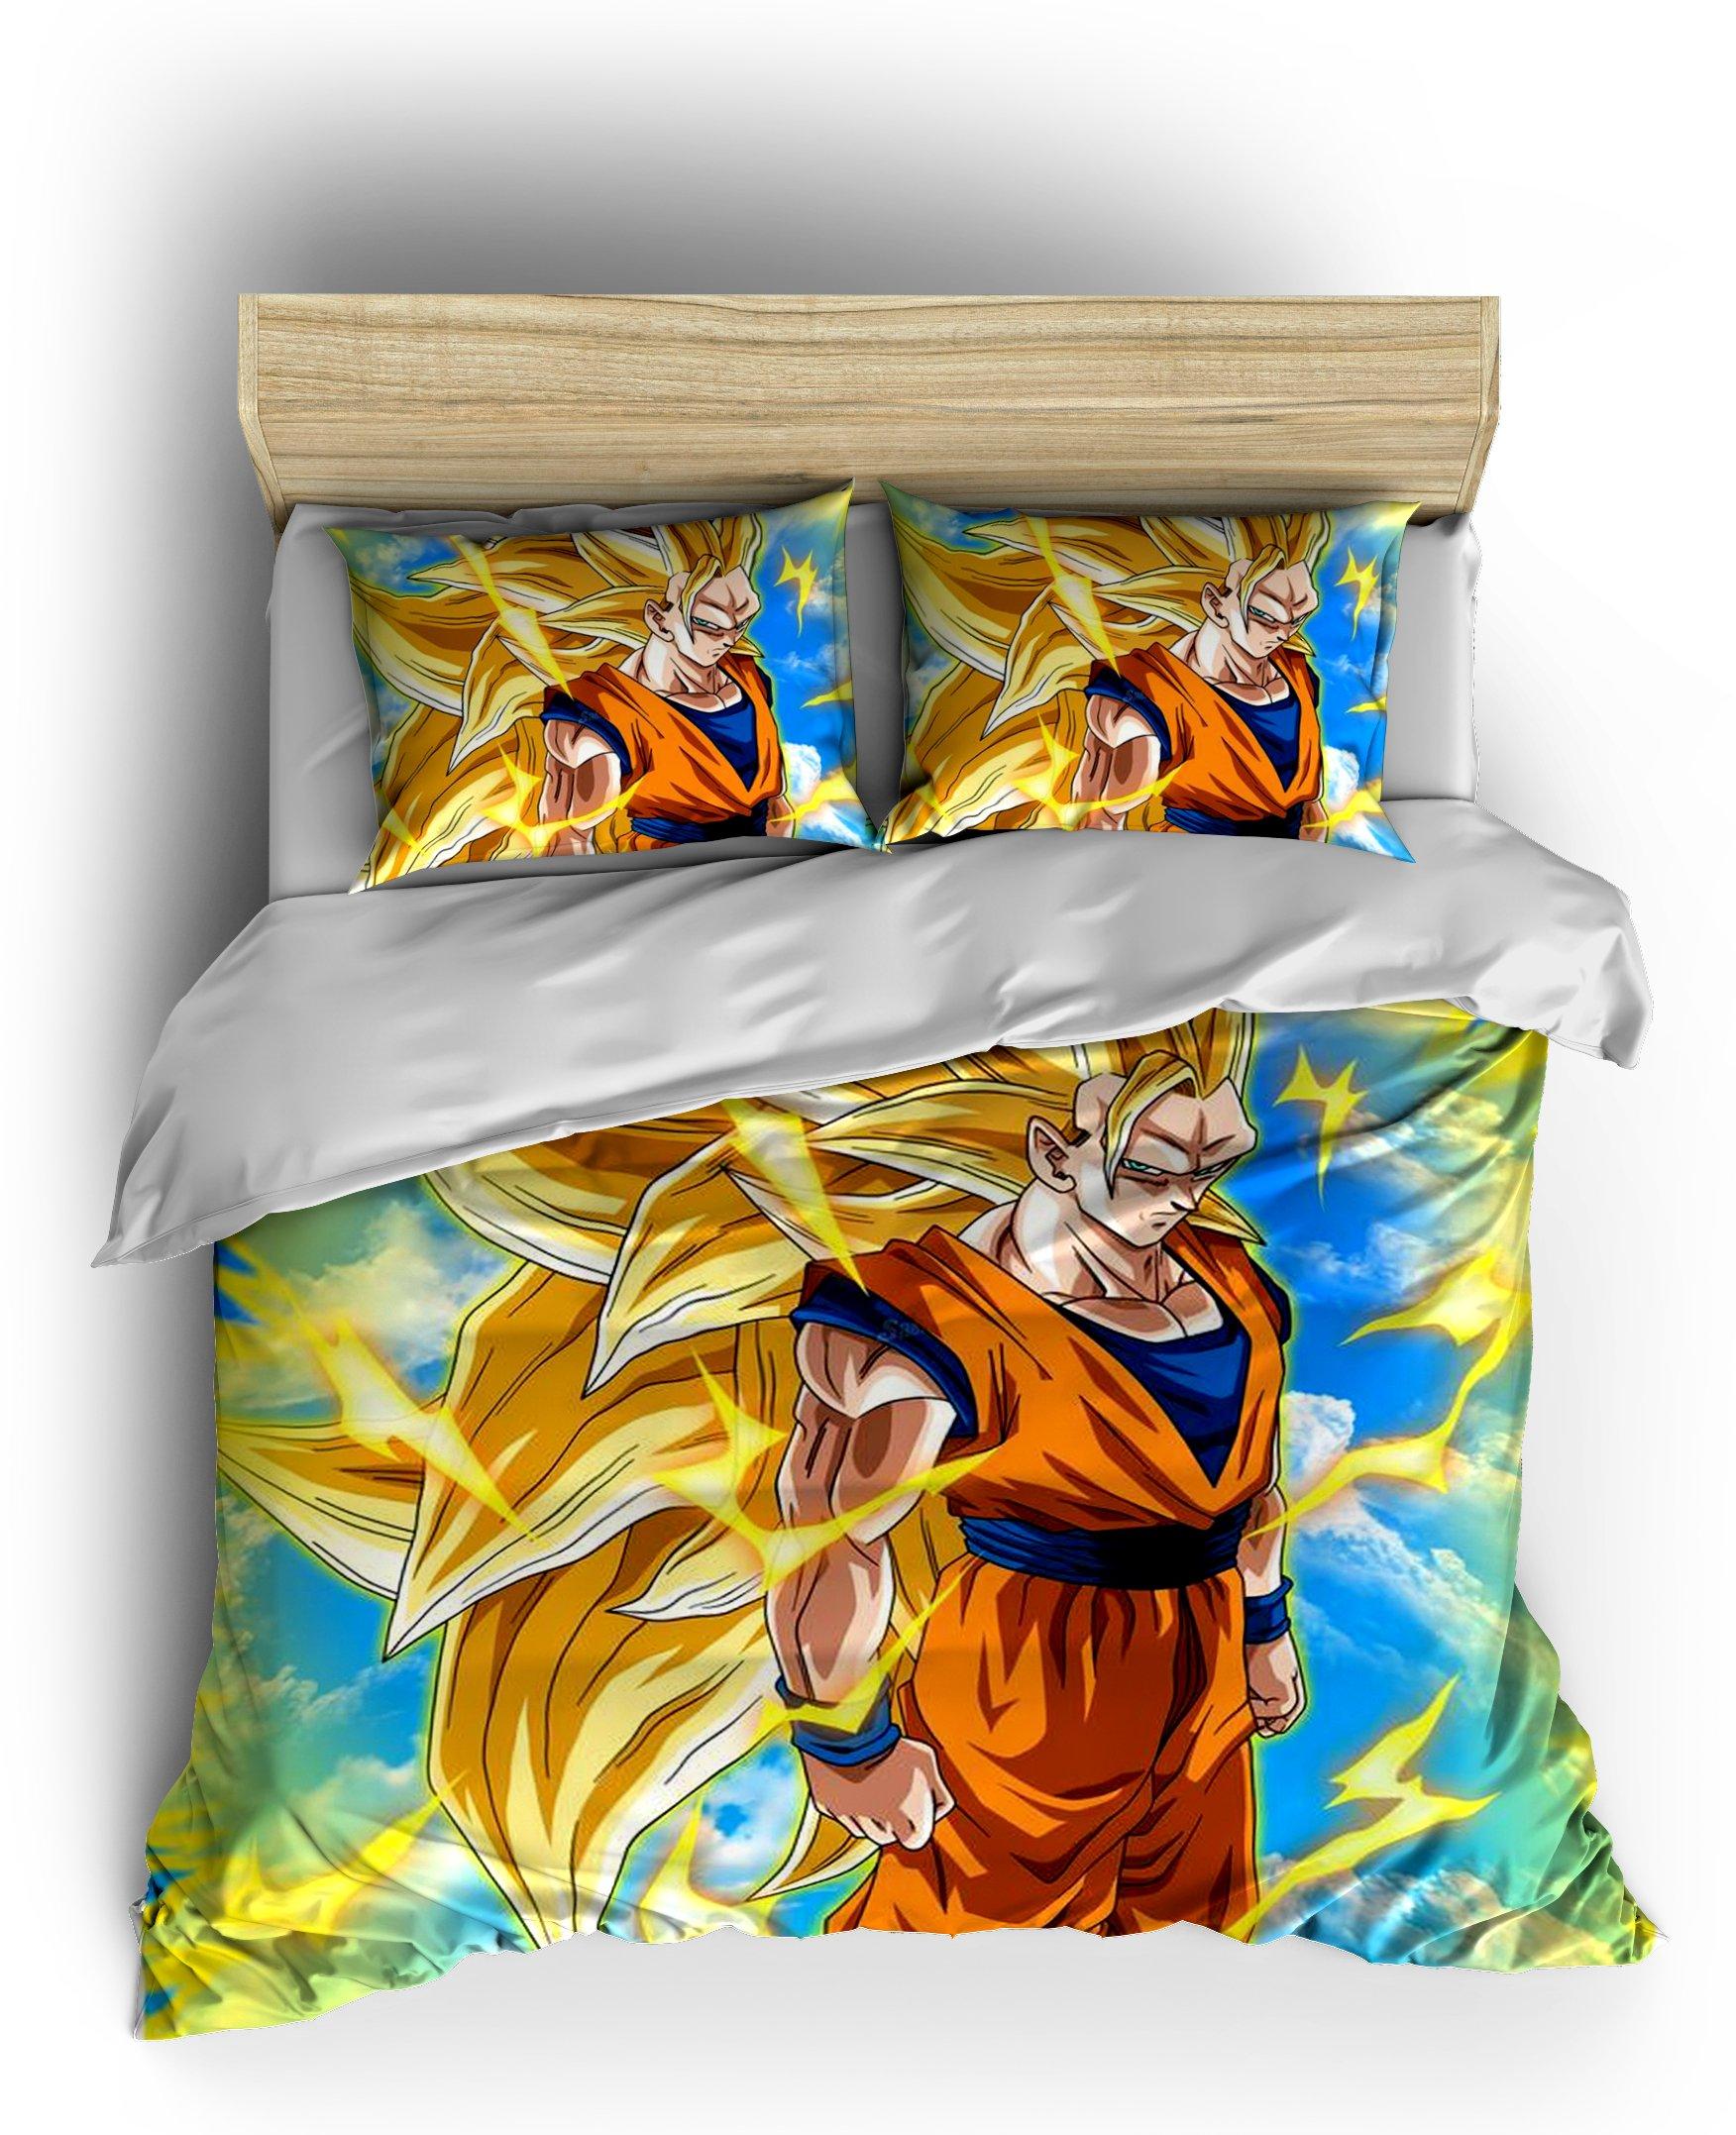 Comforter Cover DBZ  Goku Super Saiyan 3 Single - AU (140x210cm) Official Dragon Ball Z Merch